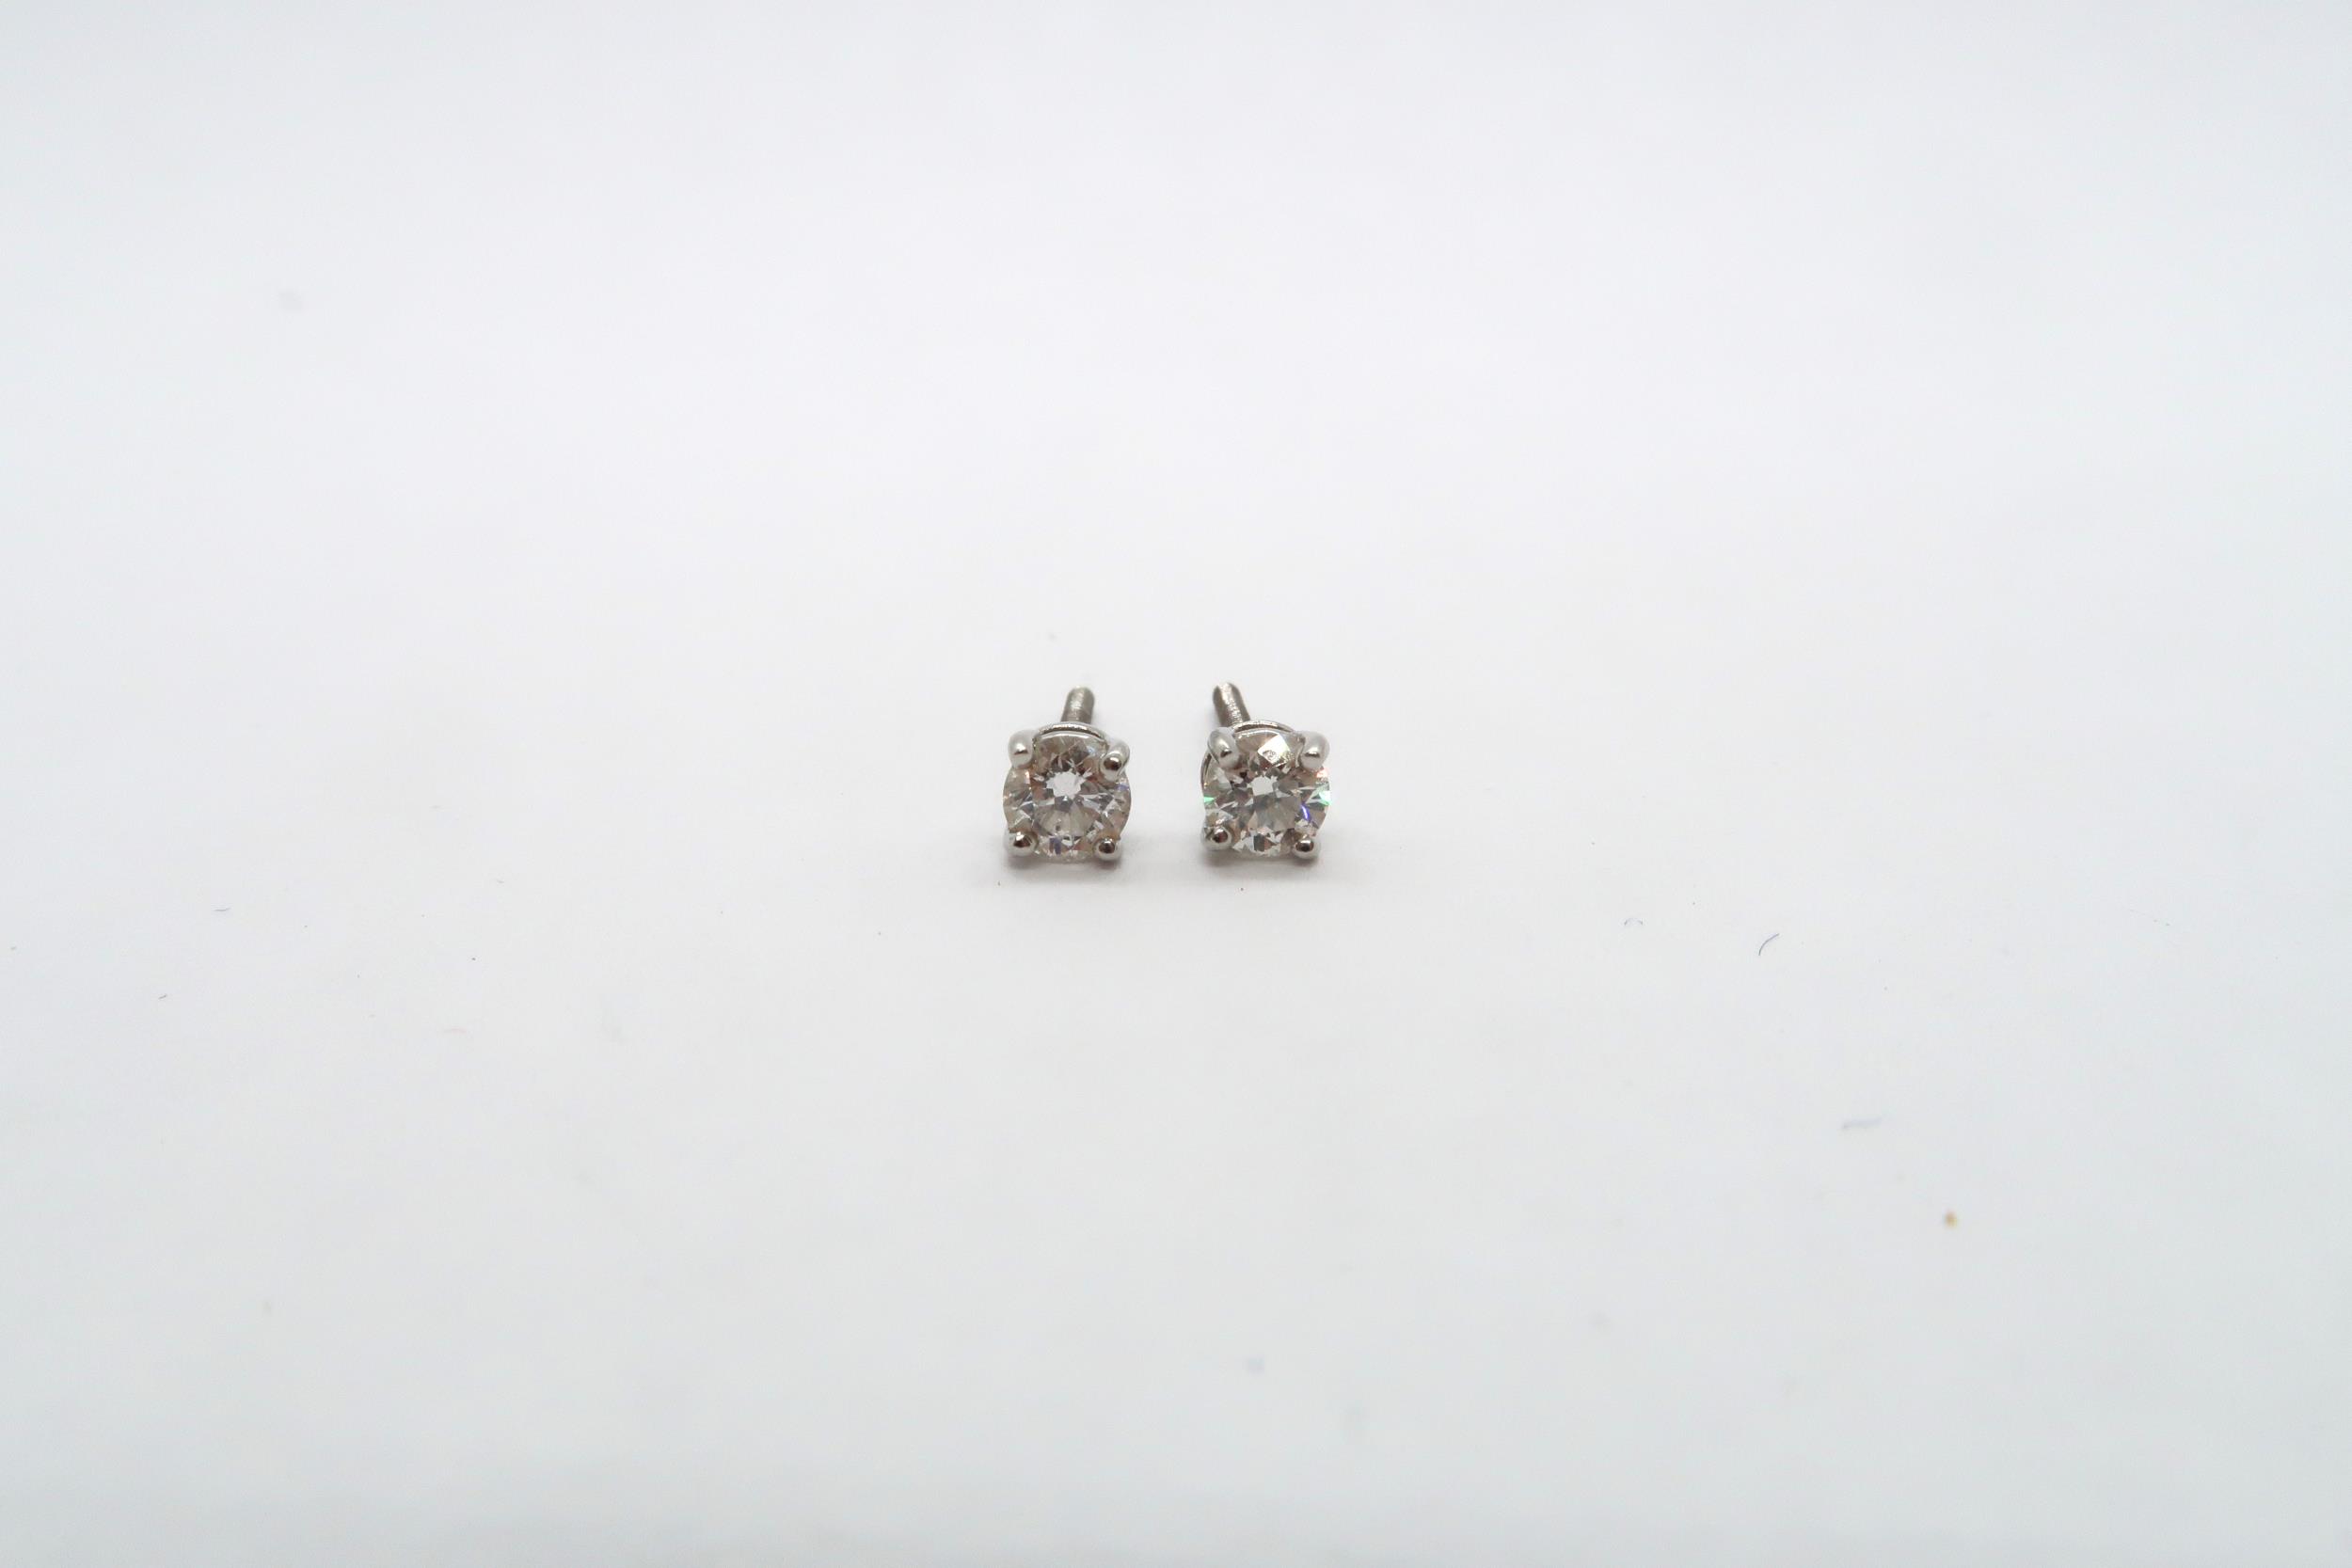 A pair of Tiffany diamond stud earrings, in Tiffany box - Image 2 of 3